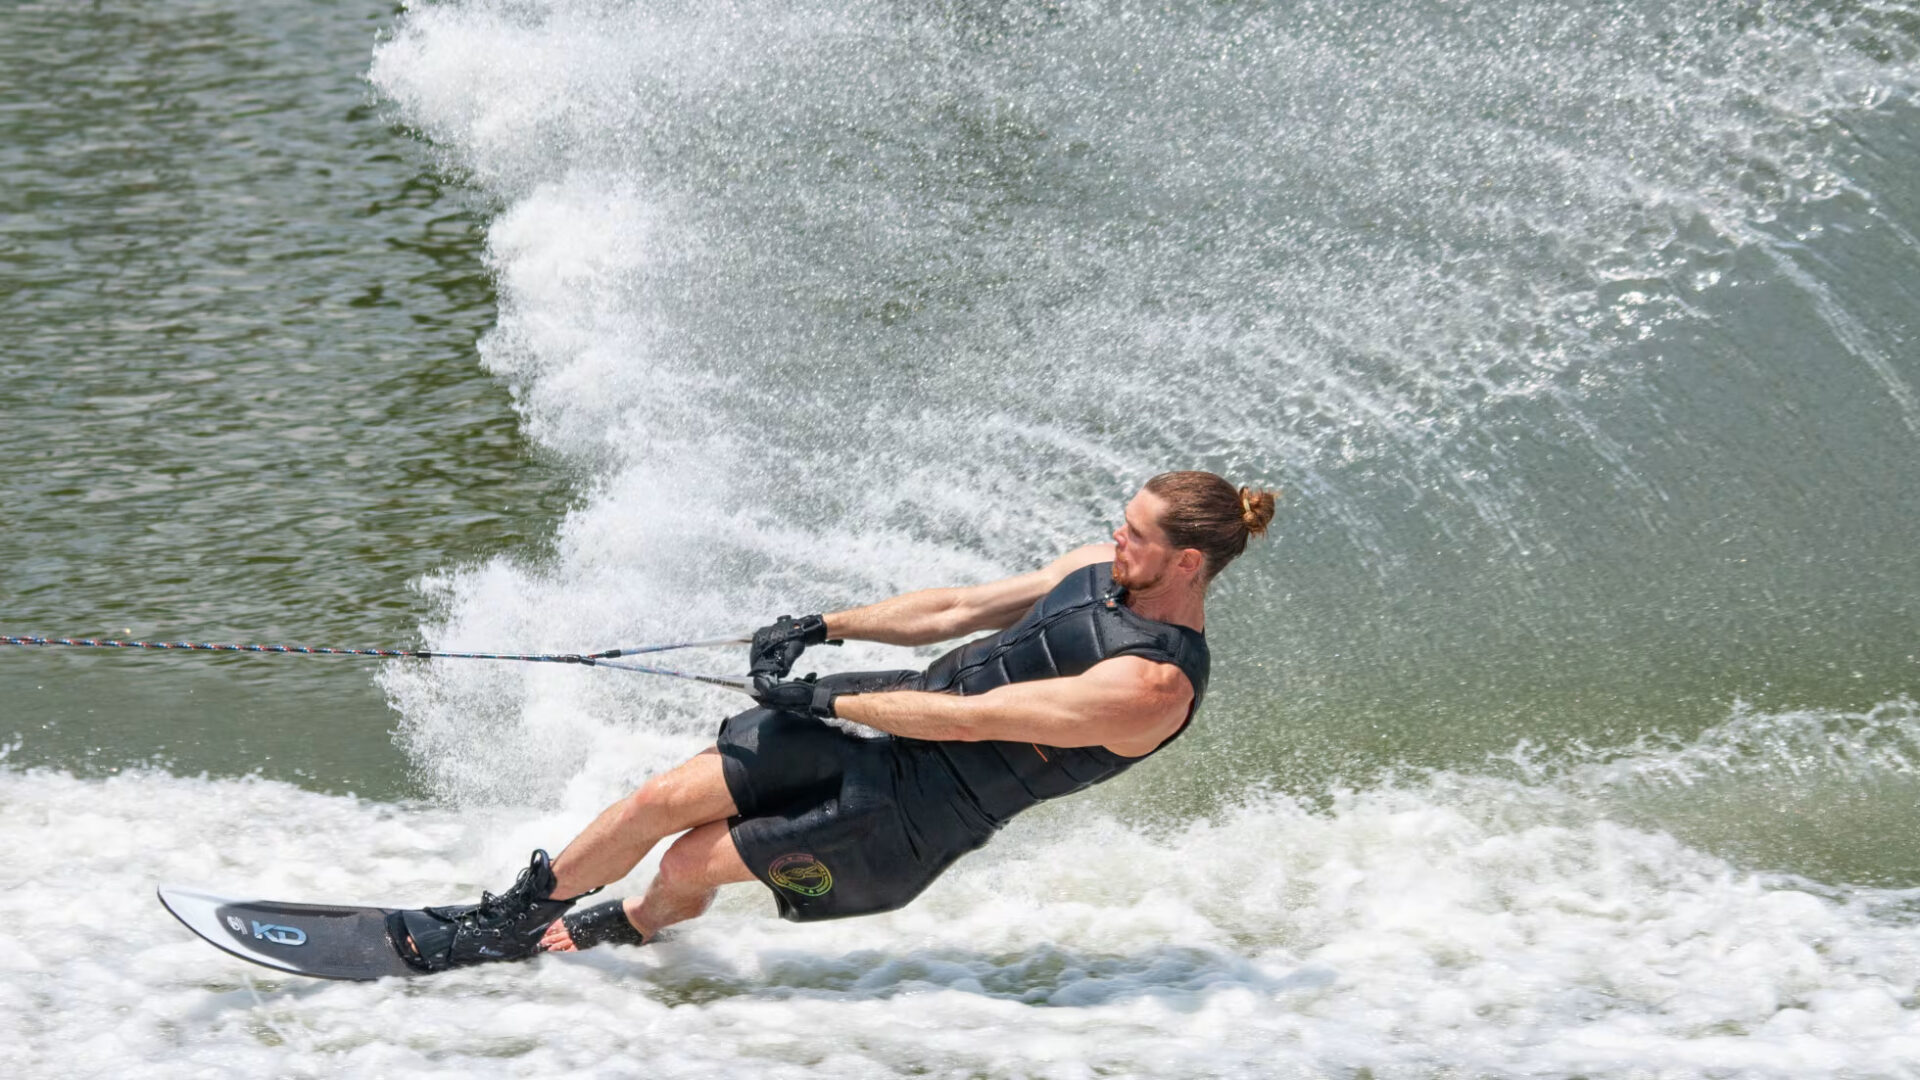 Professional water skier Corey Vaughn